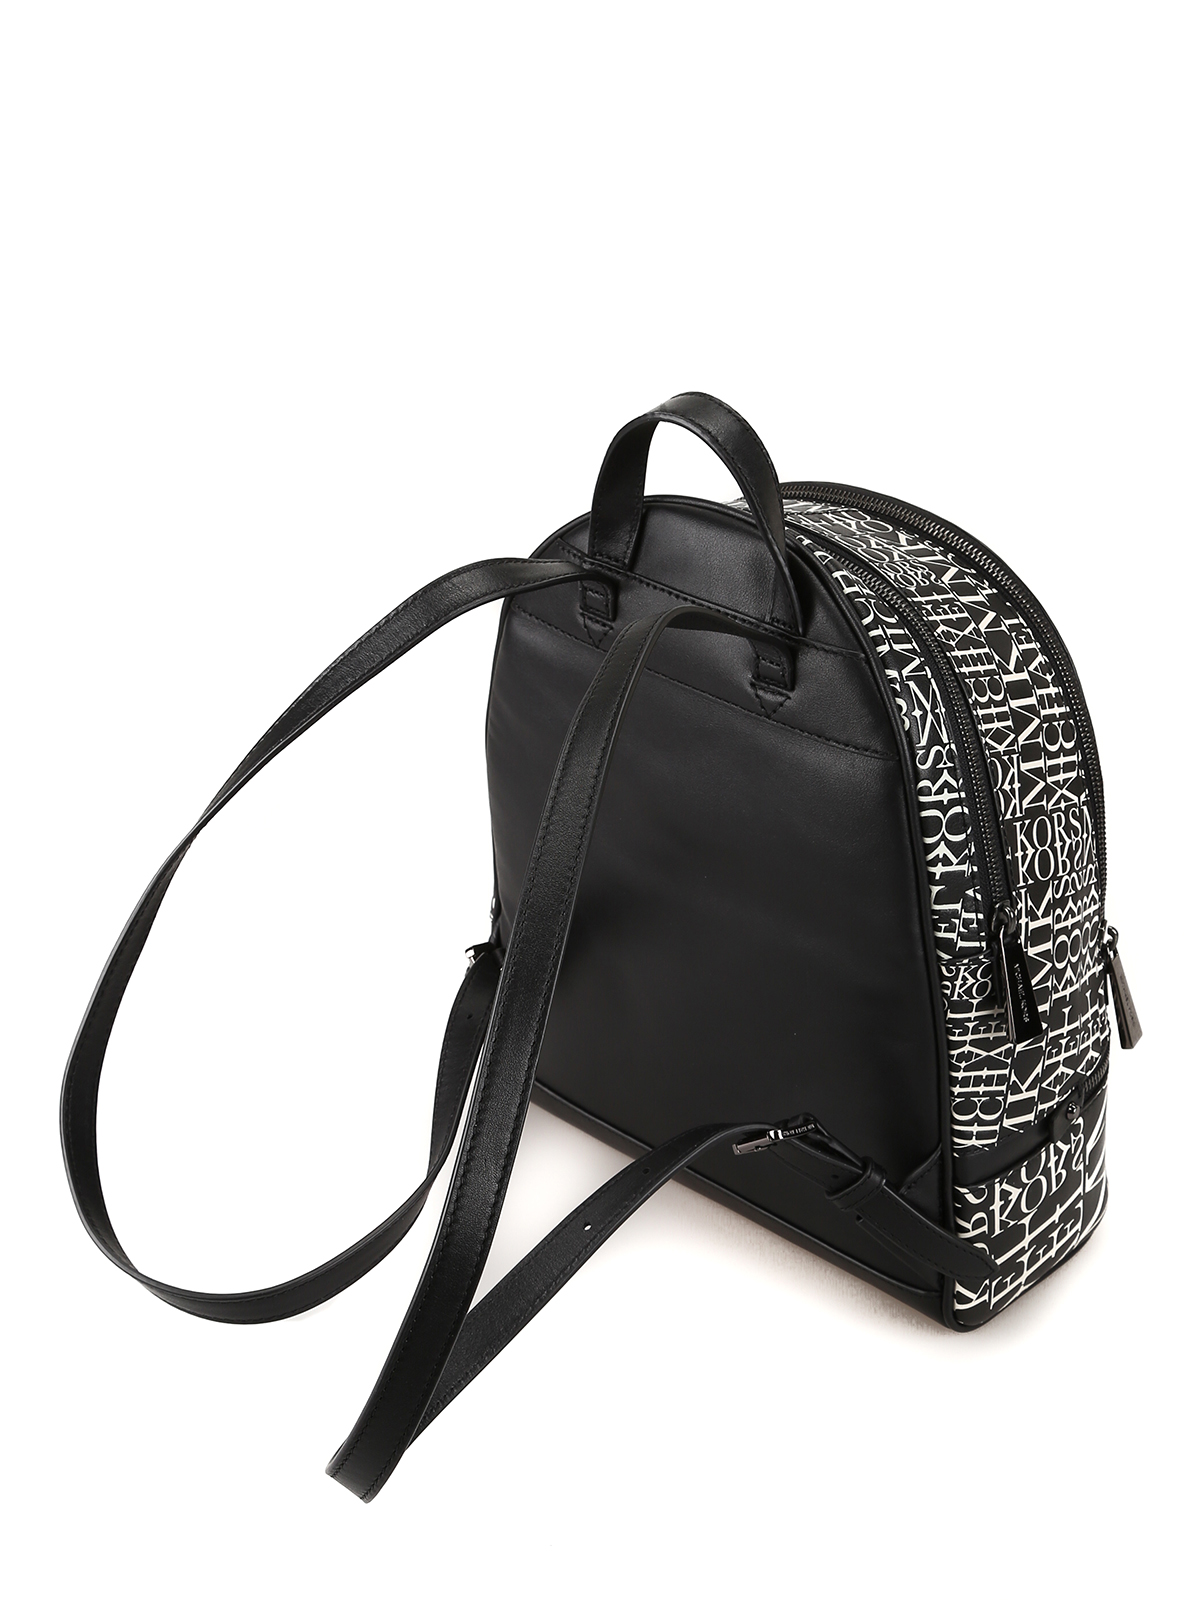 Michael Kors White & Black Rhea Medium Leather Backpack